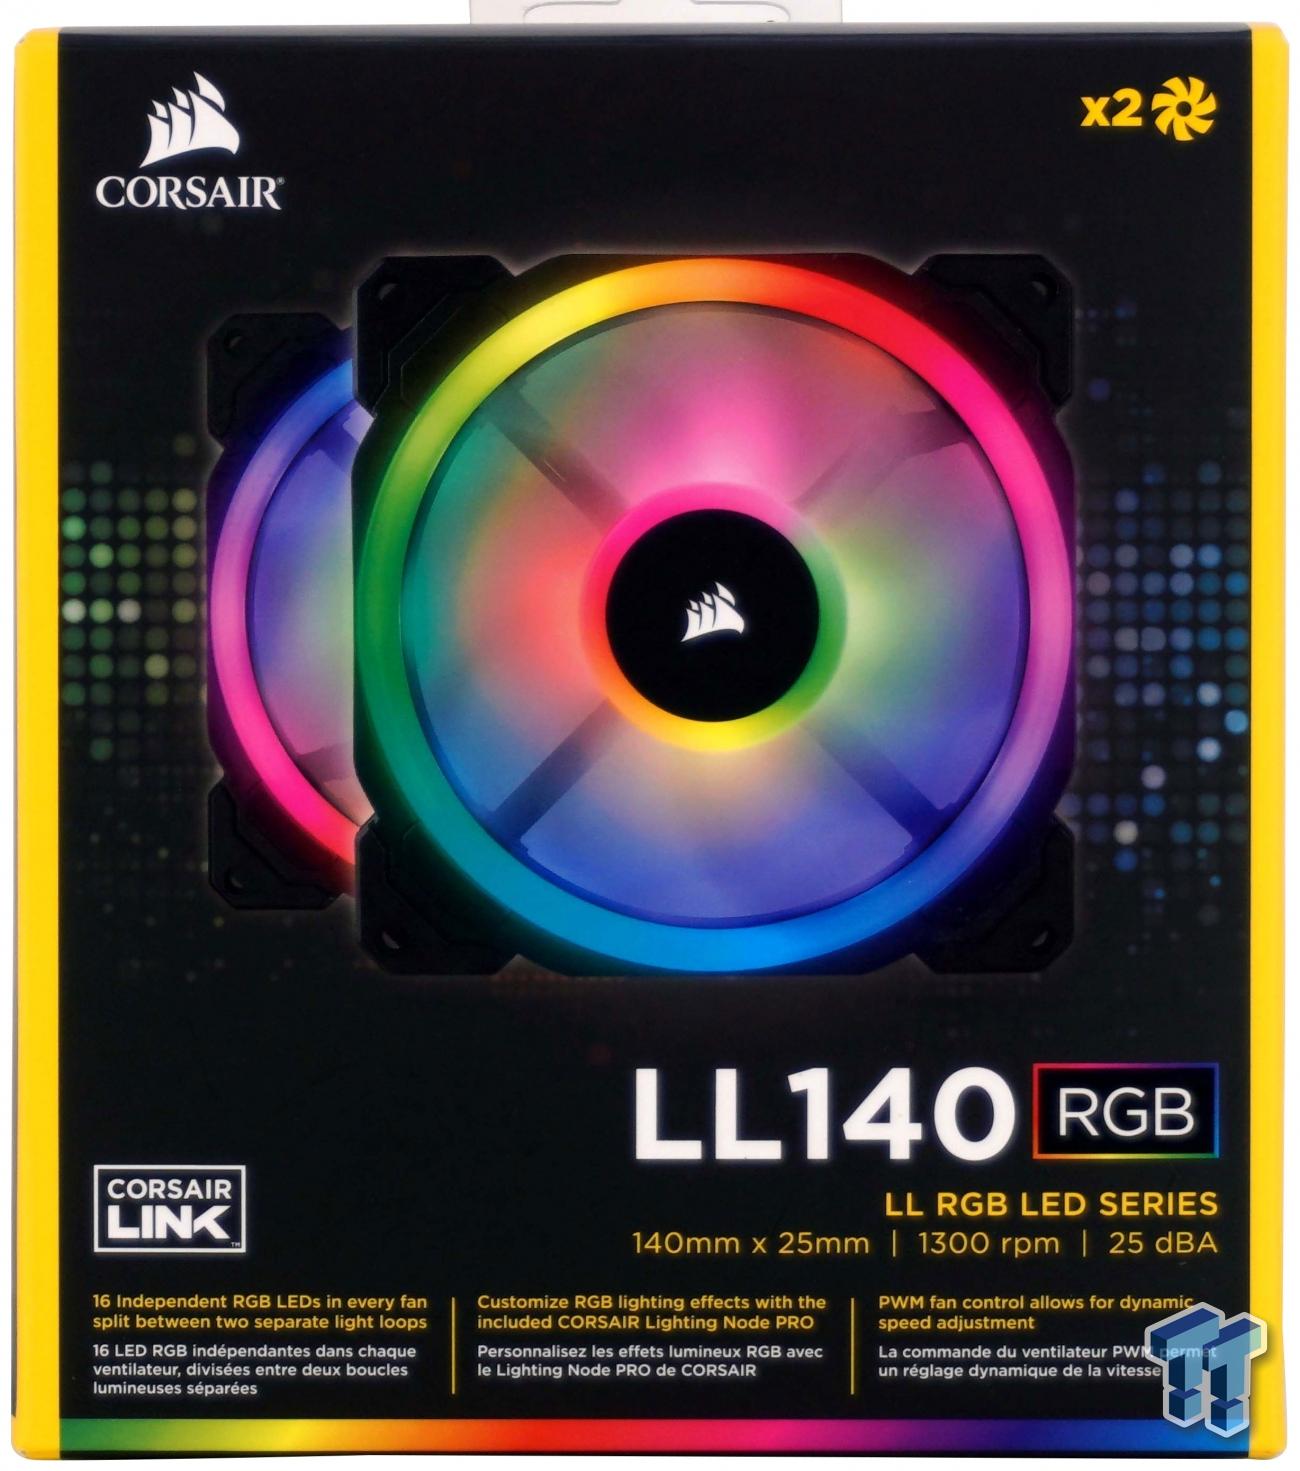 Corsair LL140 Dual Light Loop RGB LED Fan Review